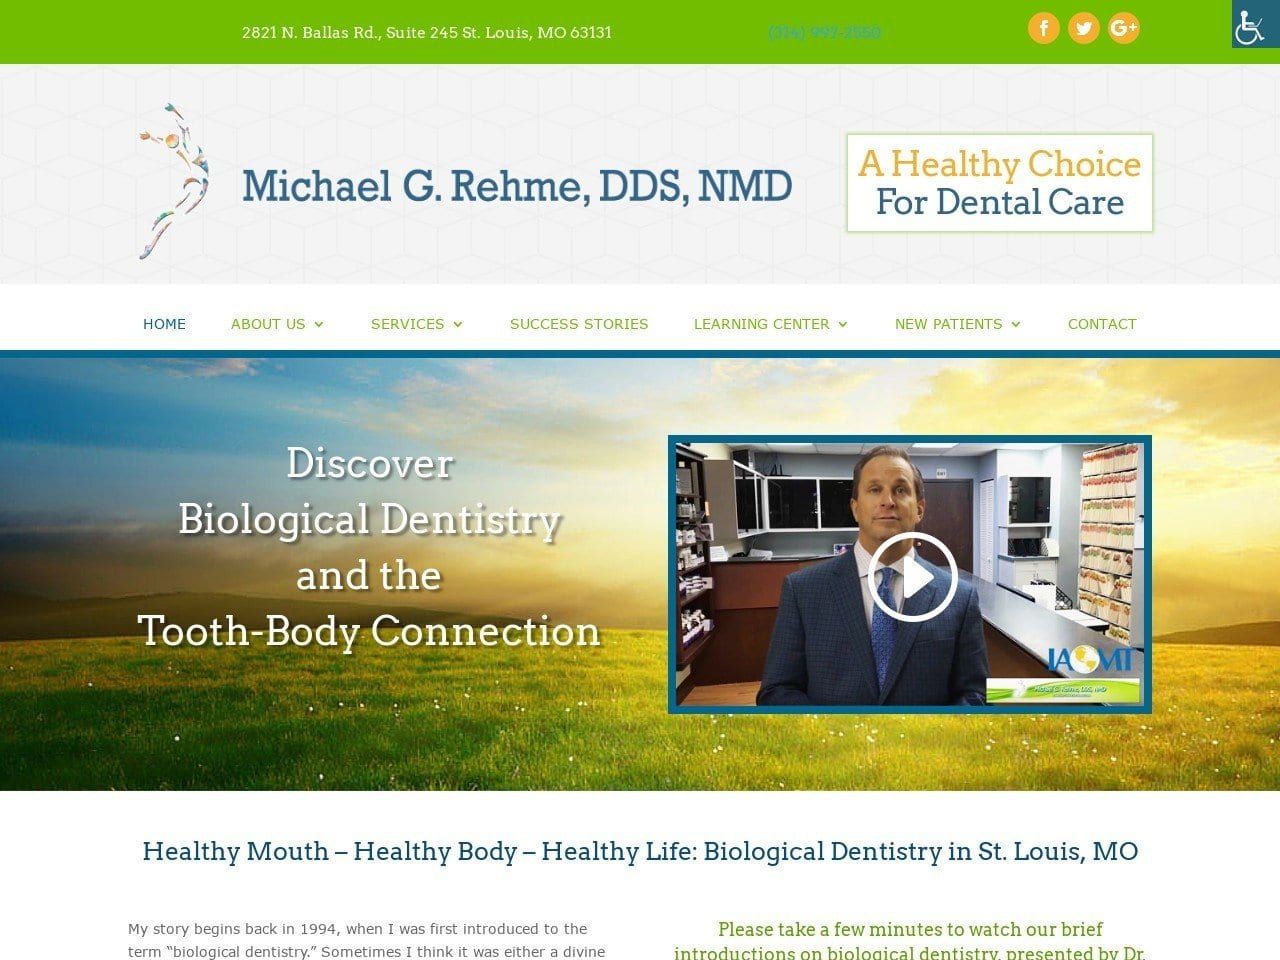 Michael G. Rehme DDS CCN and Associates Website Screenshot from toothbody.com